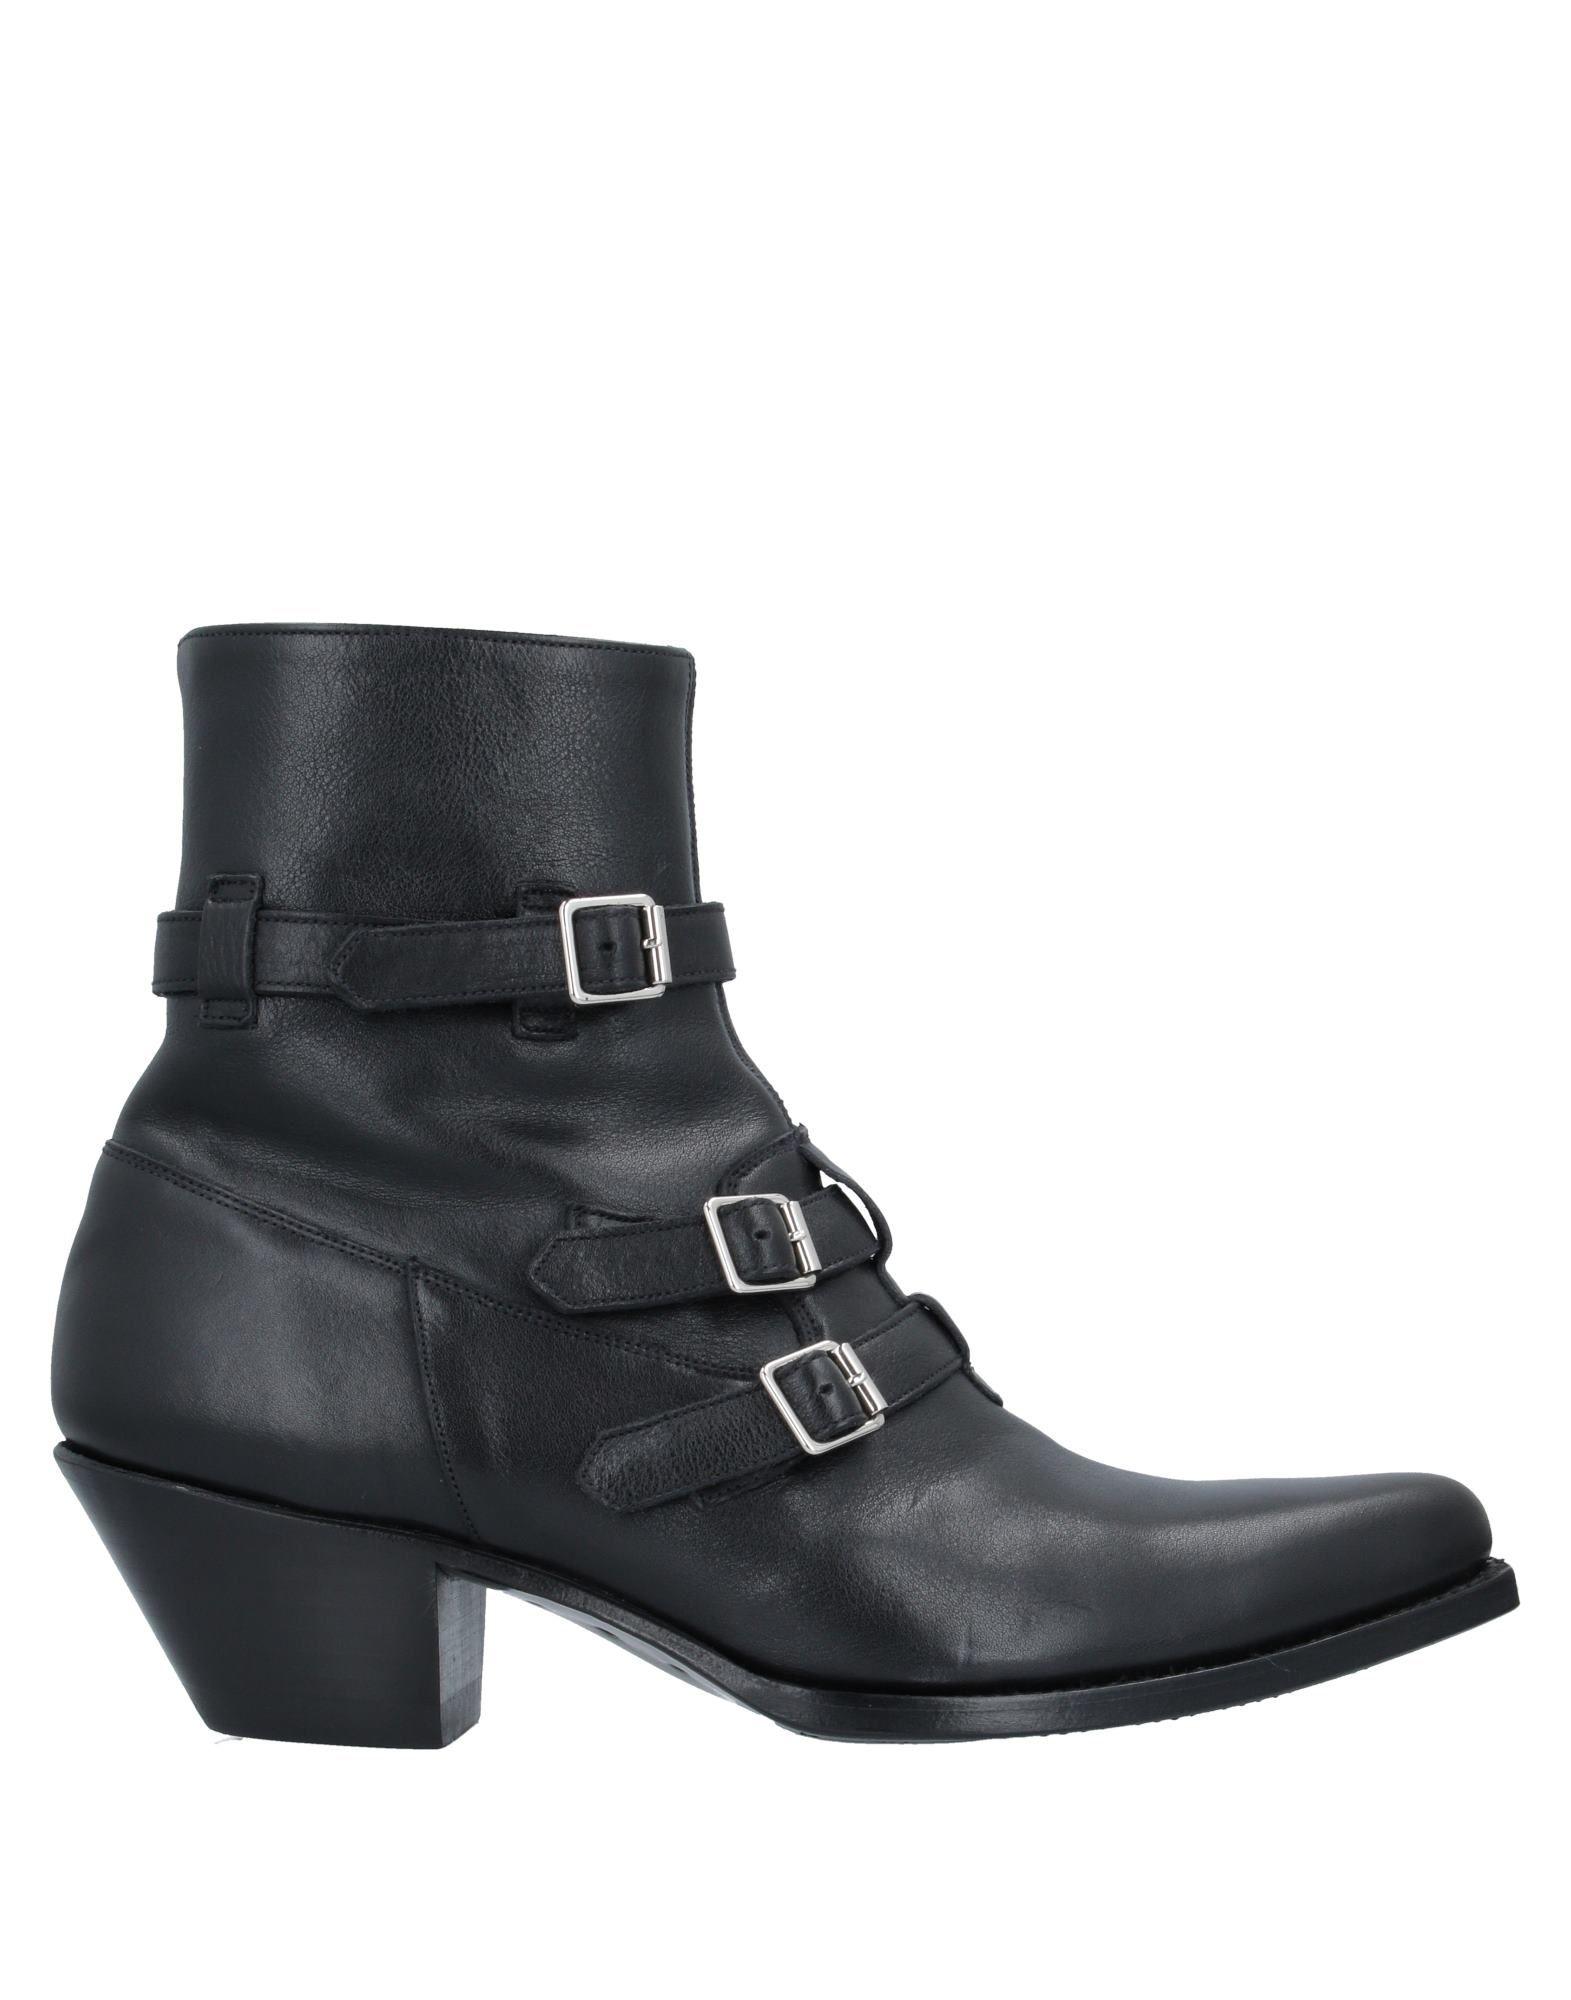 Celine Ankle Boots in Black for Men - Lyst